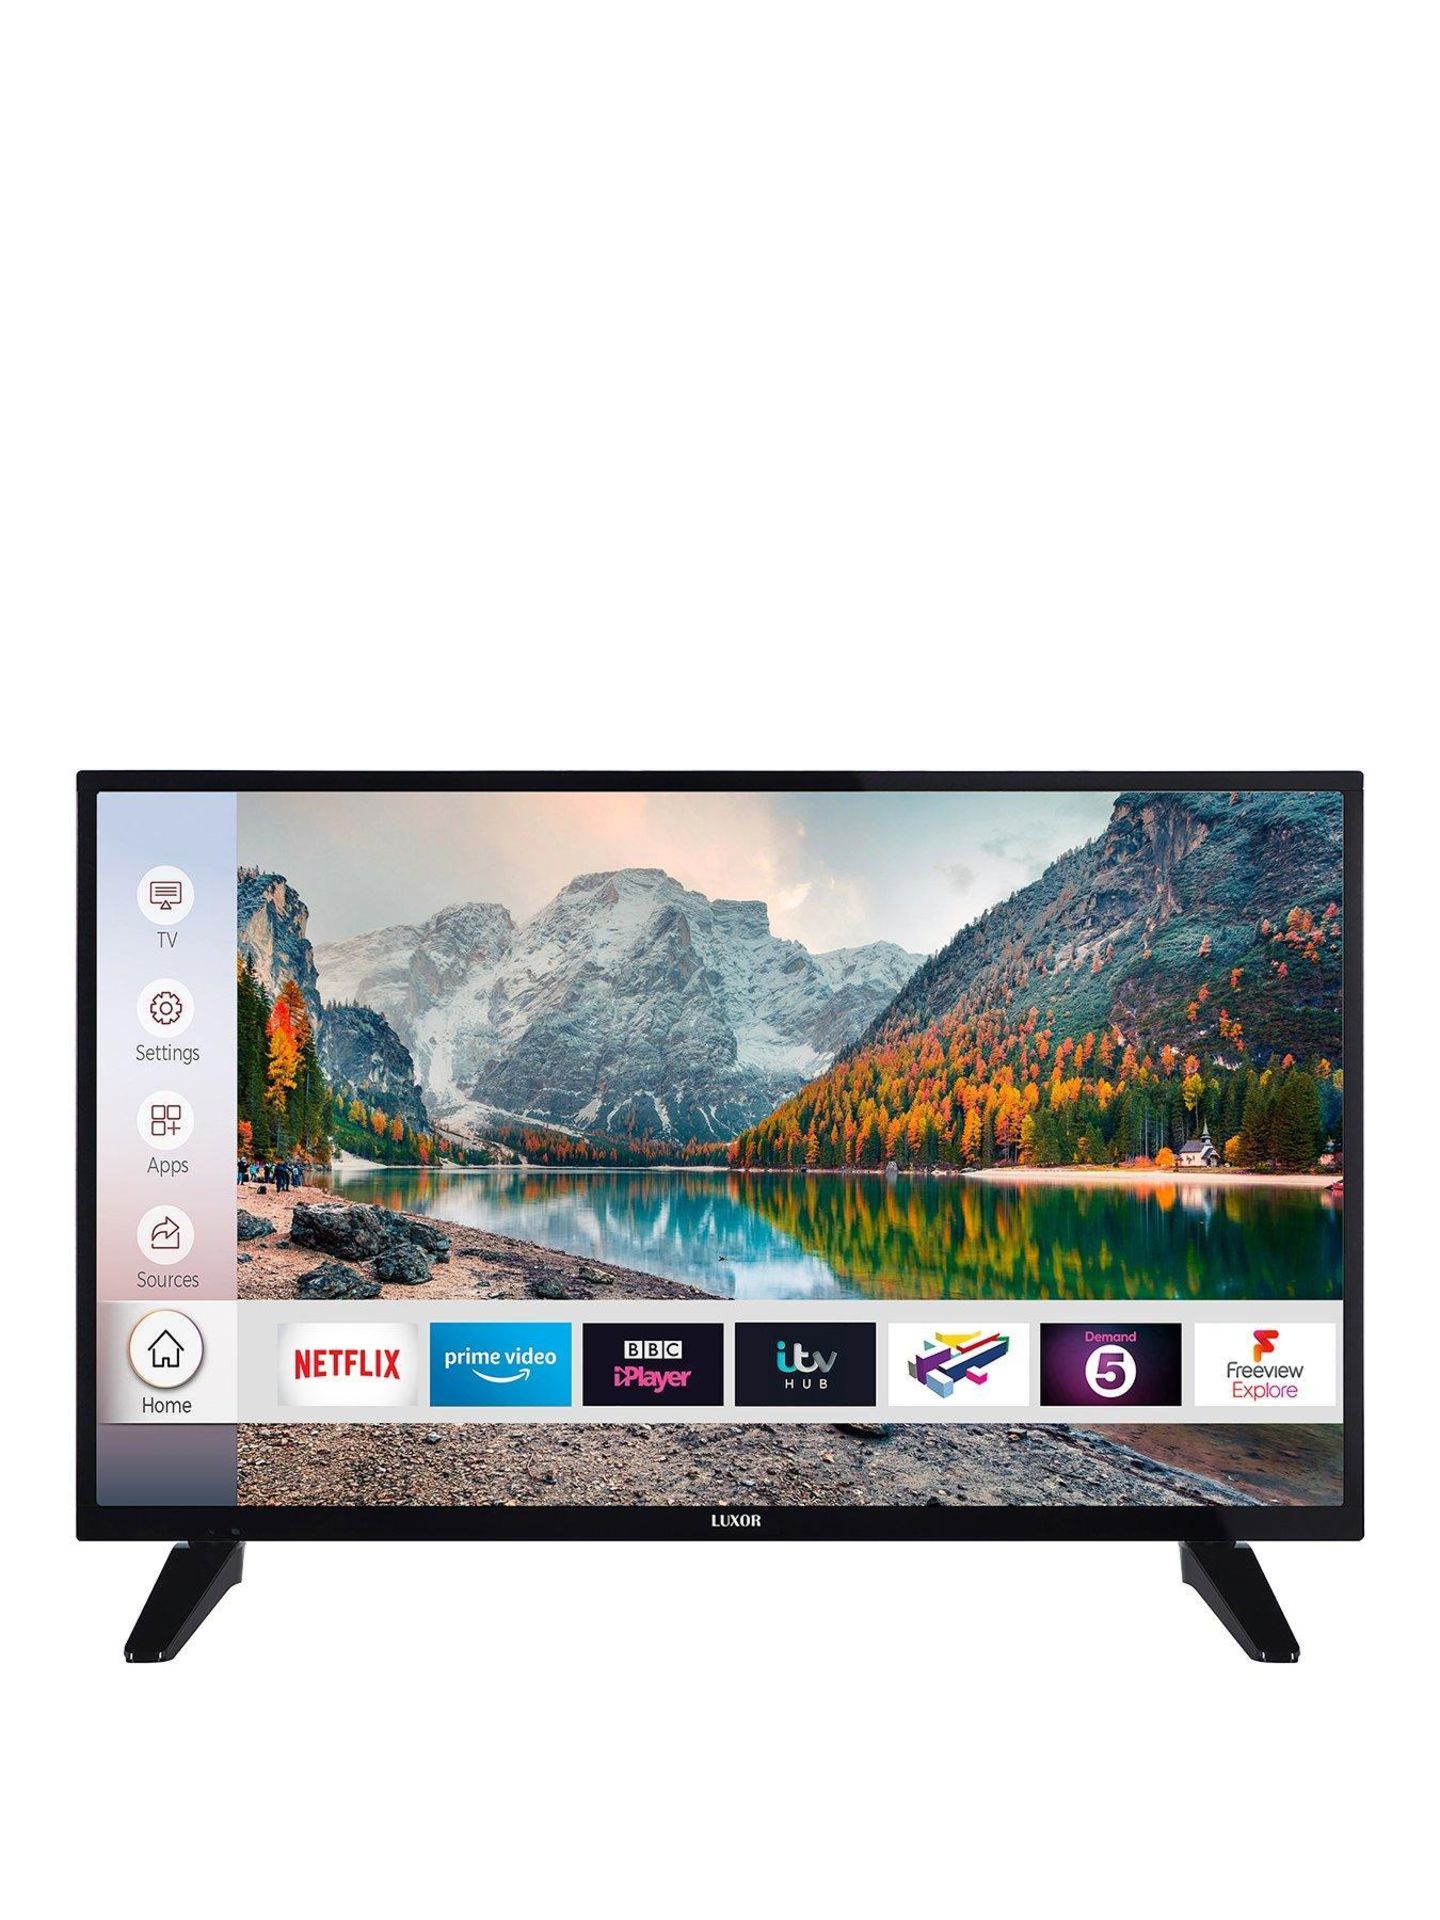 Luxor 32 inch full hd, freeview play, smart tv [black] 37x56x14cm rrp: £382.0